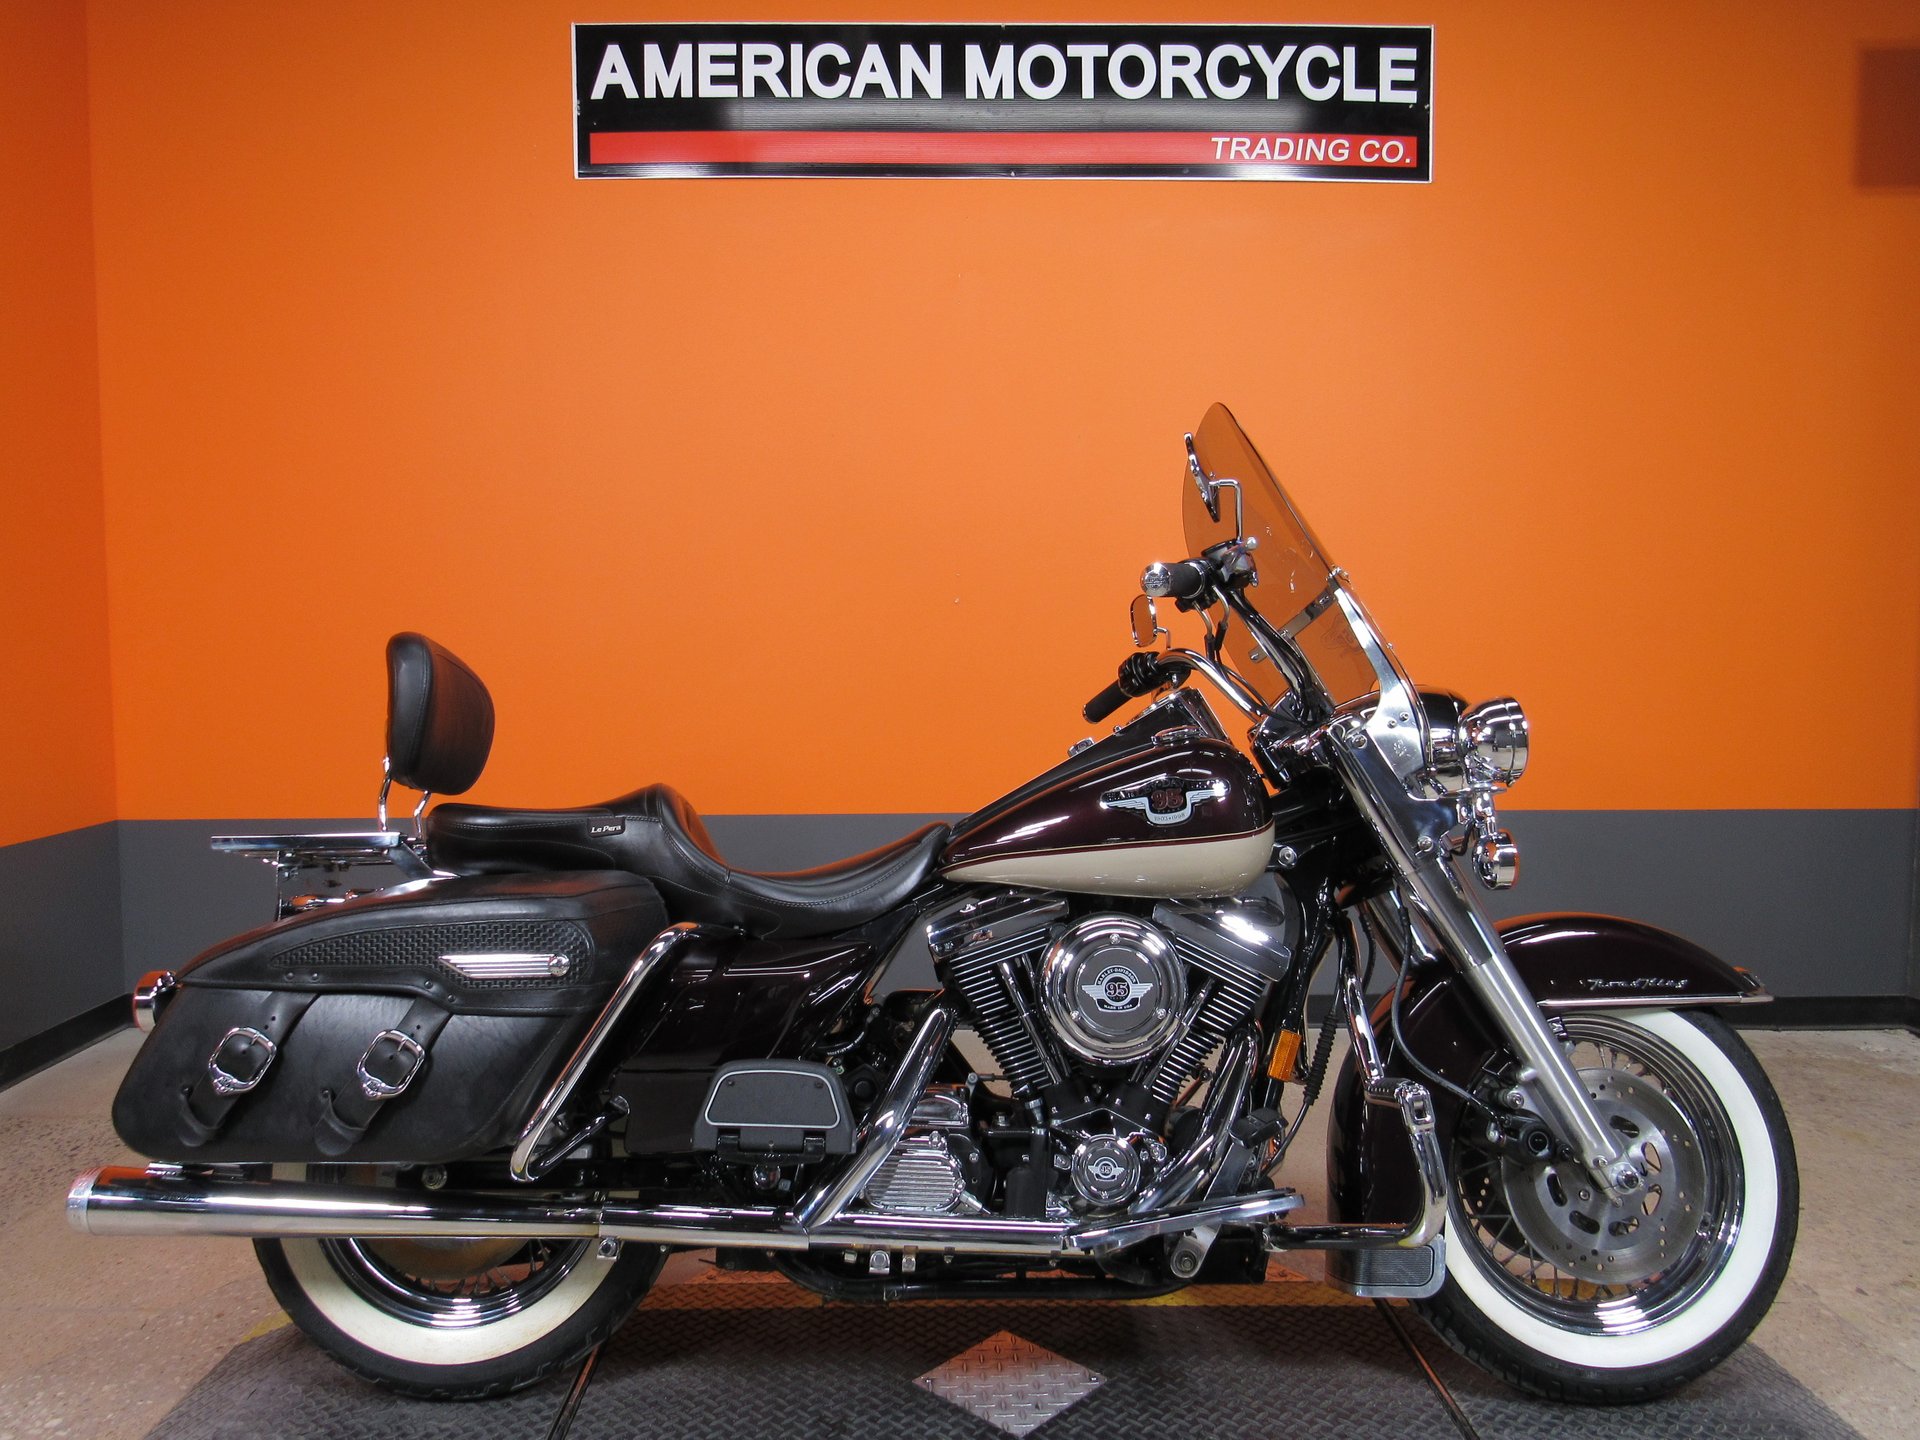 1998 Harley Davidson Road King American Motorcycle Trading Company Used Harley Davidson Motorcycles